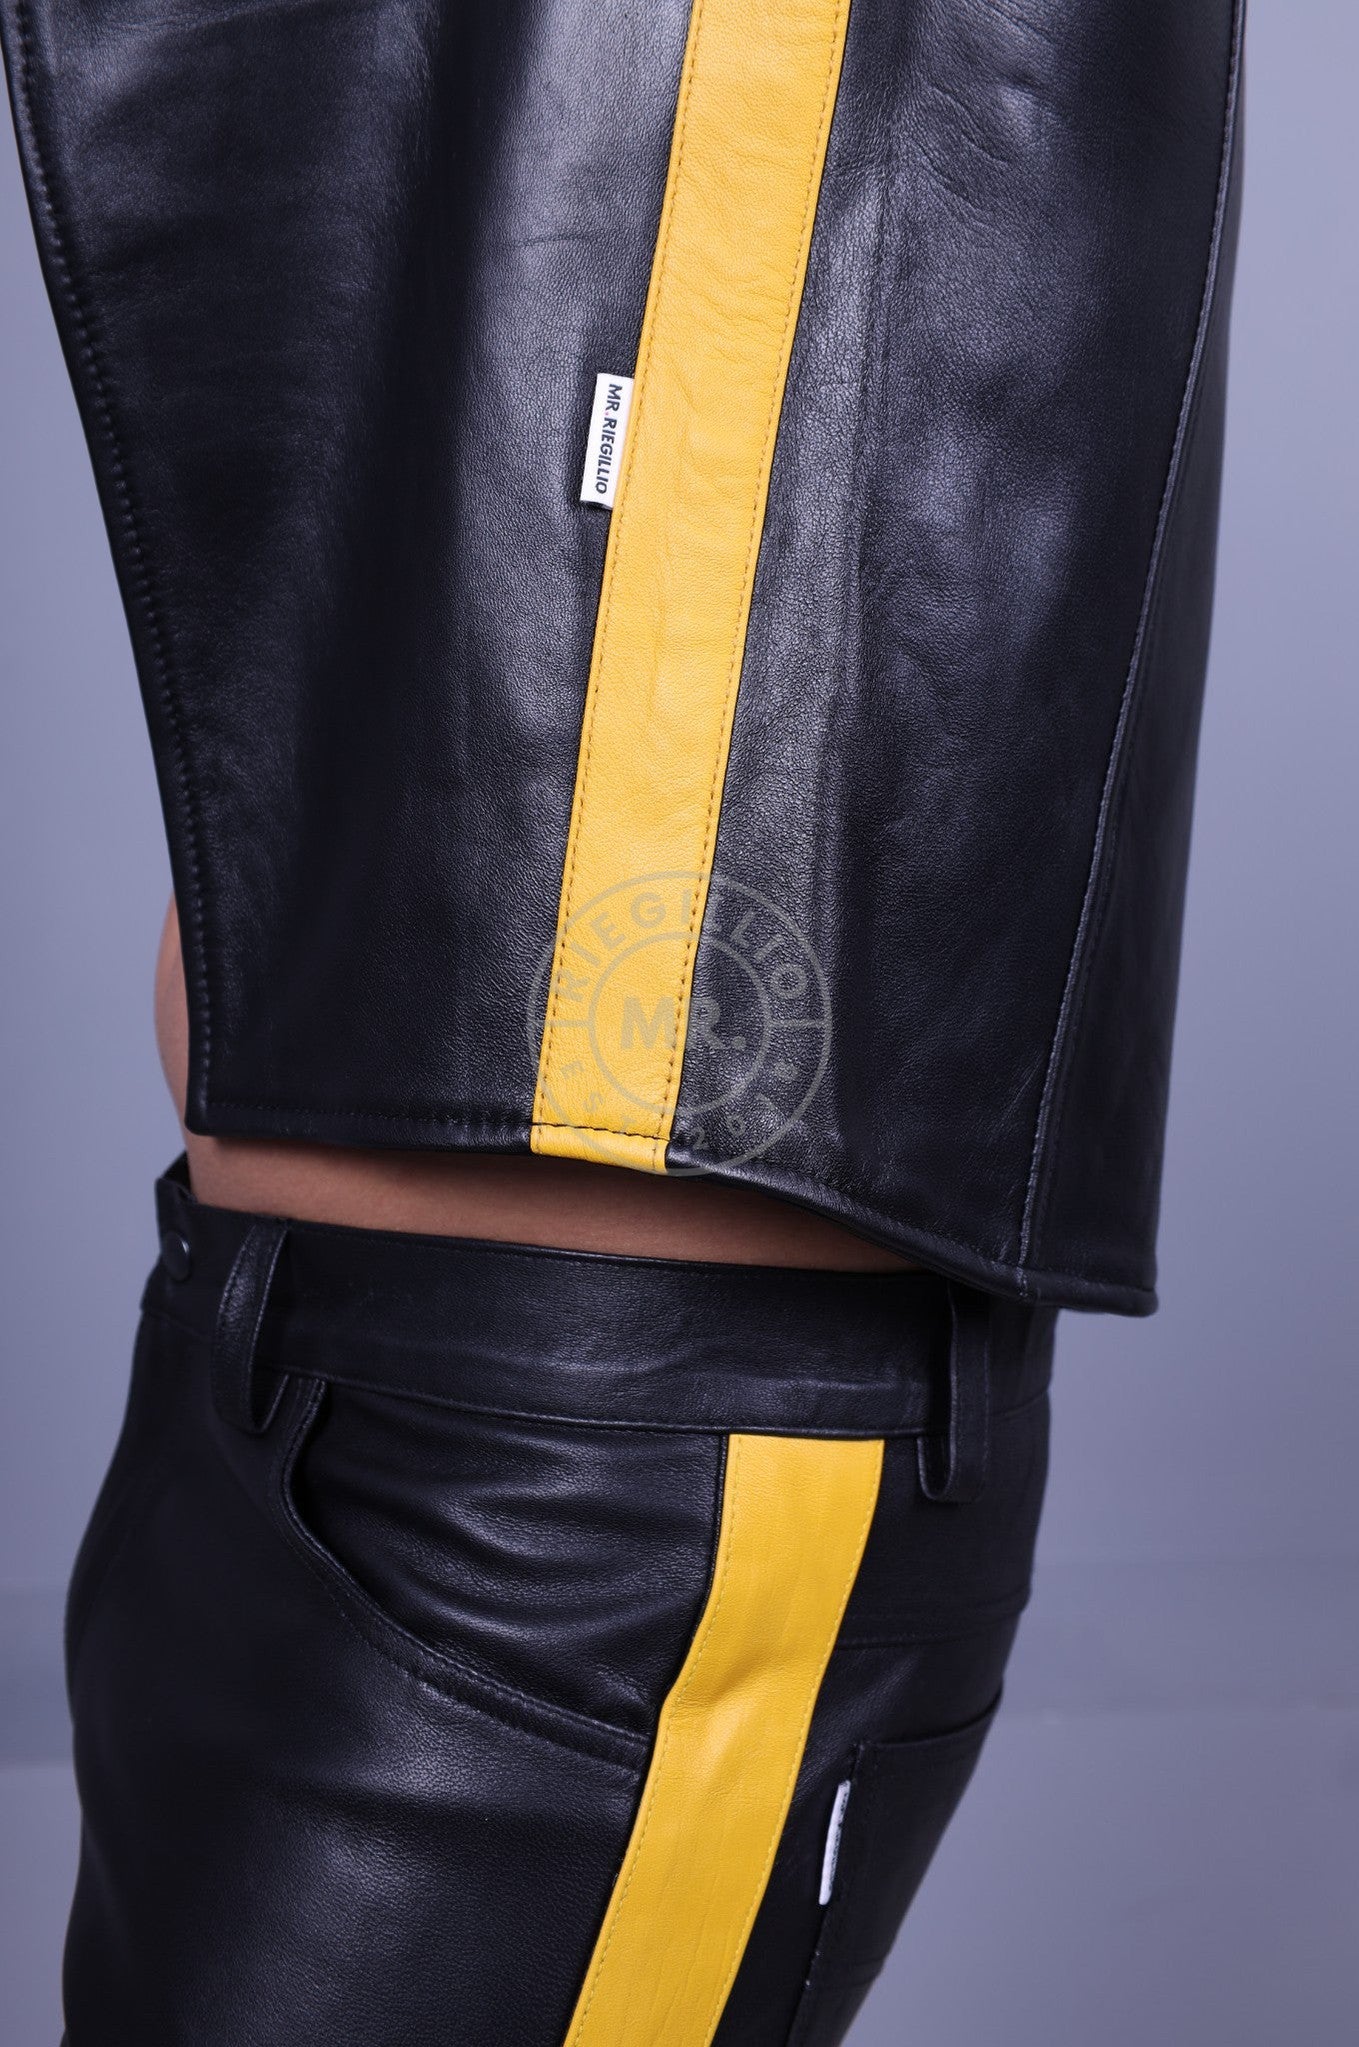 Black Leather Waistcoat - Yellow Stripe at MR. Riegillio